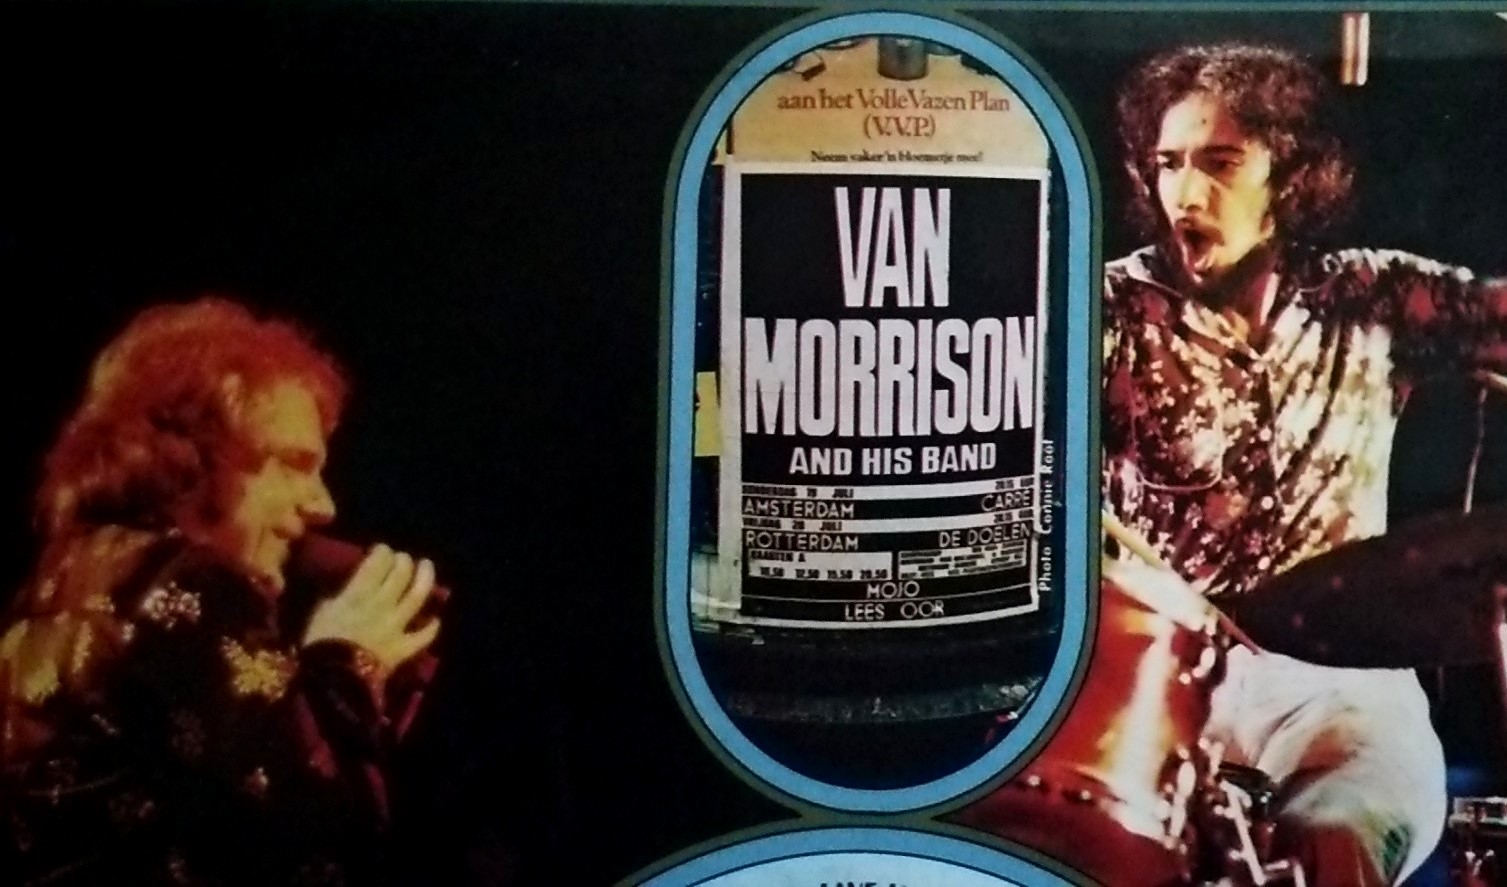 Van Morrison ‎ヴァン・モリソン - It's Too Late To Stop Now 魂の道のり - inside3